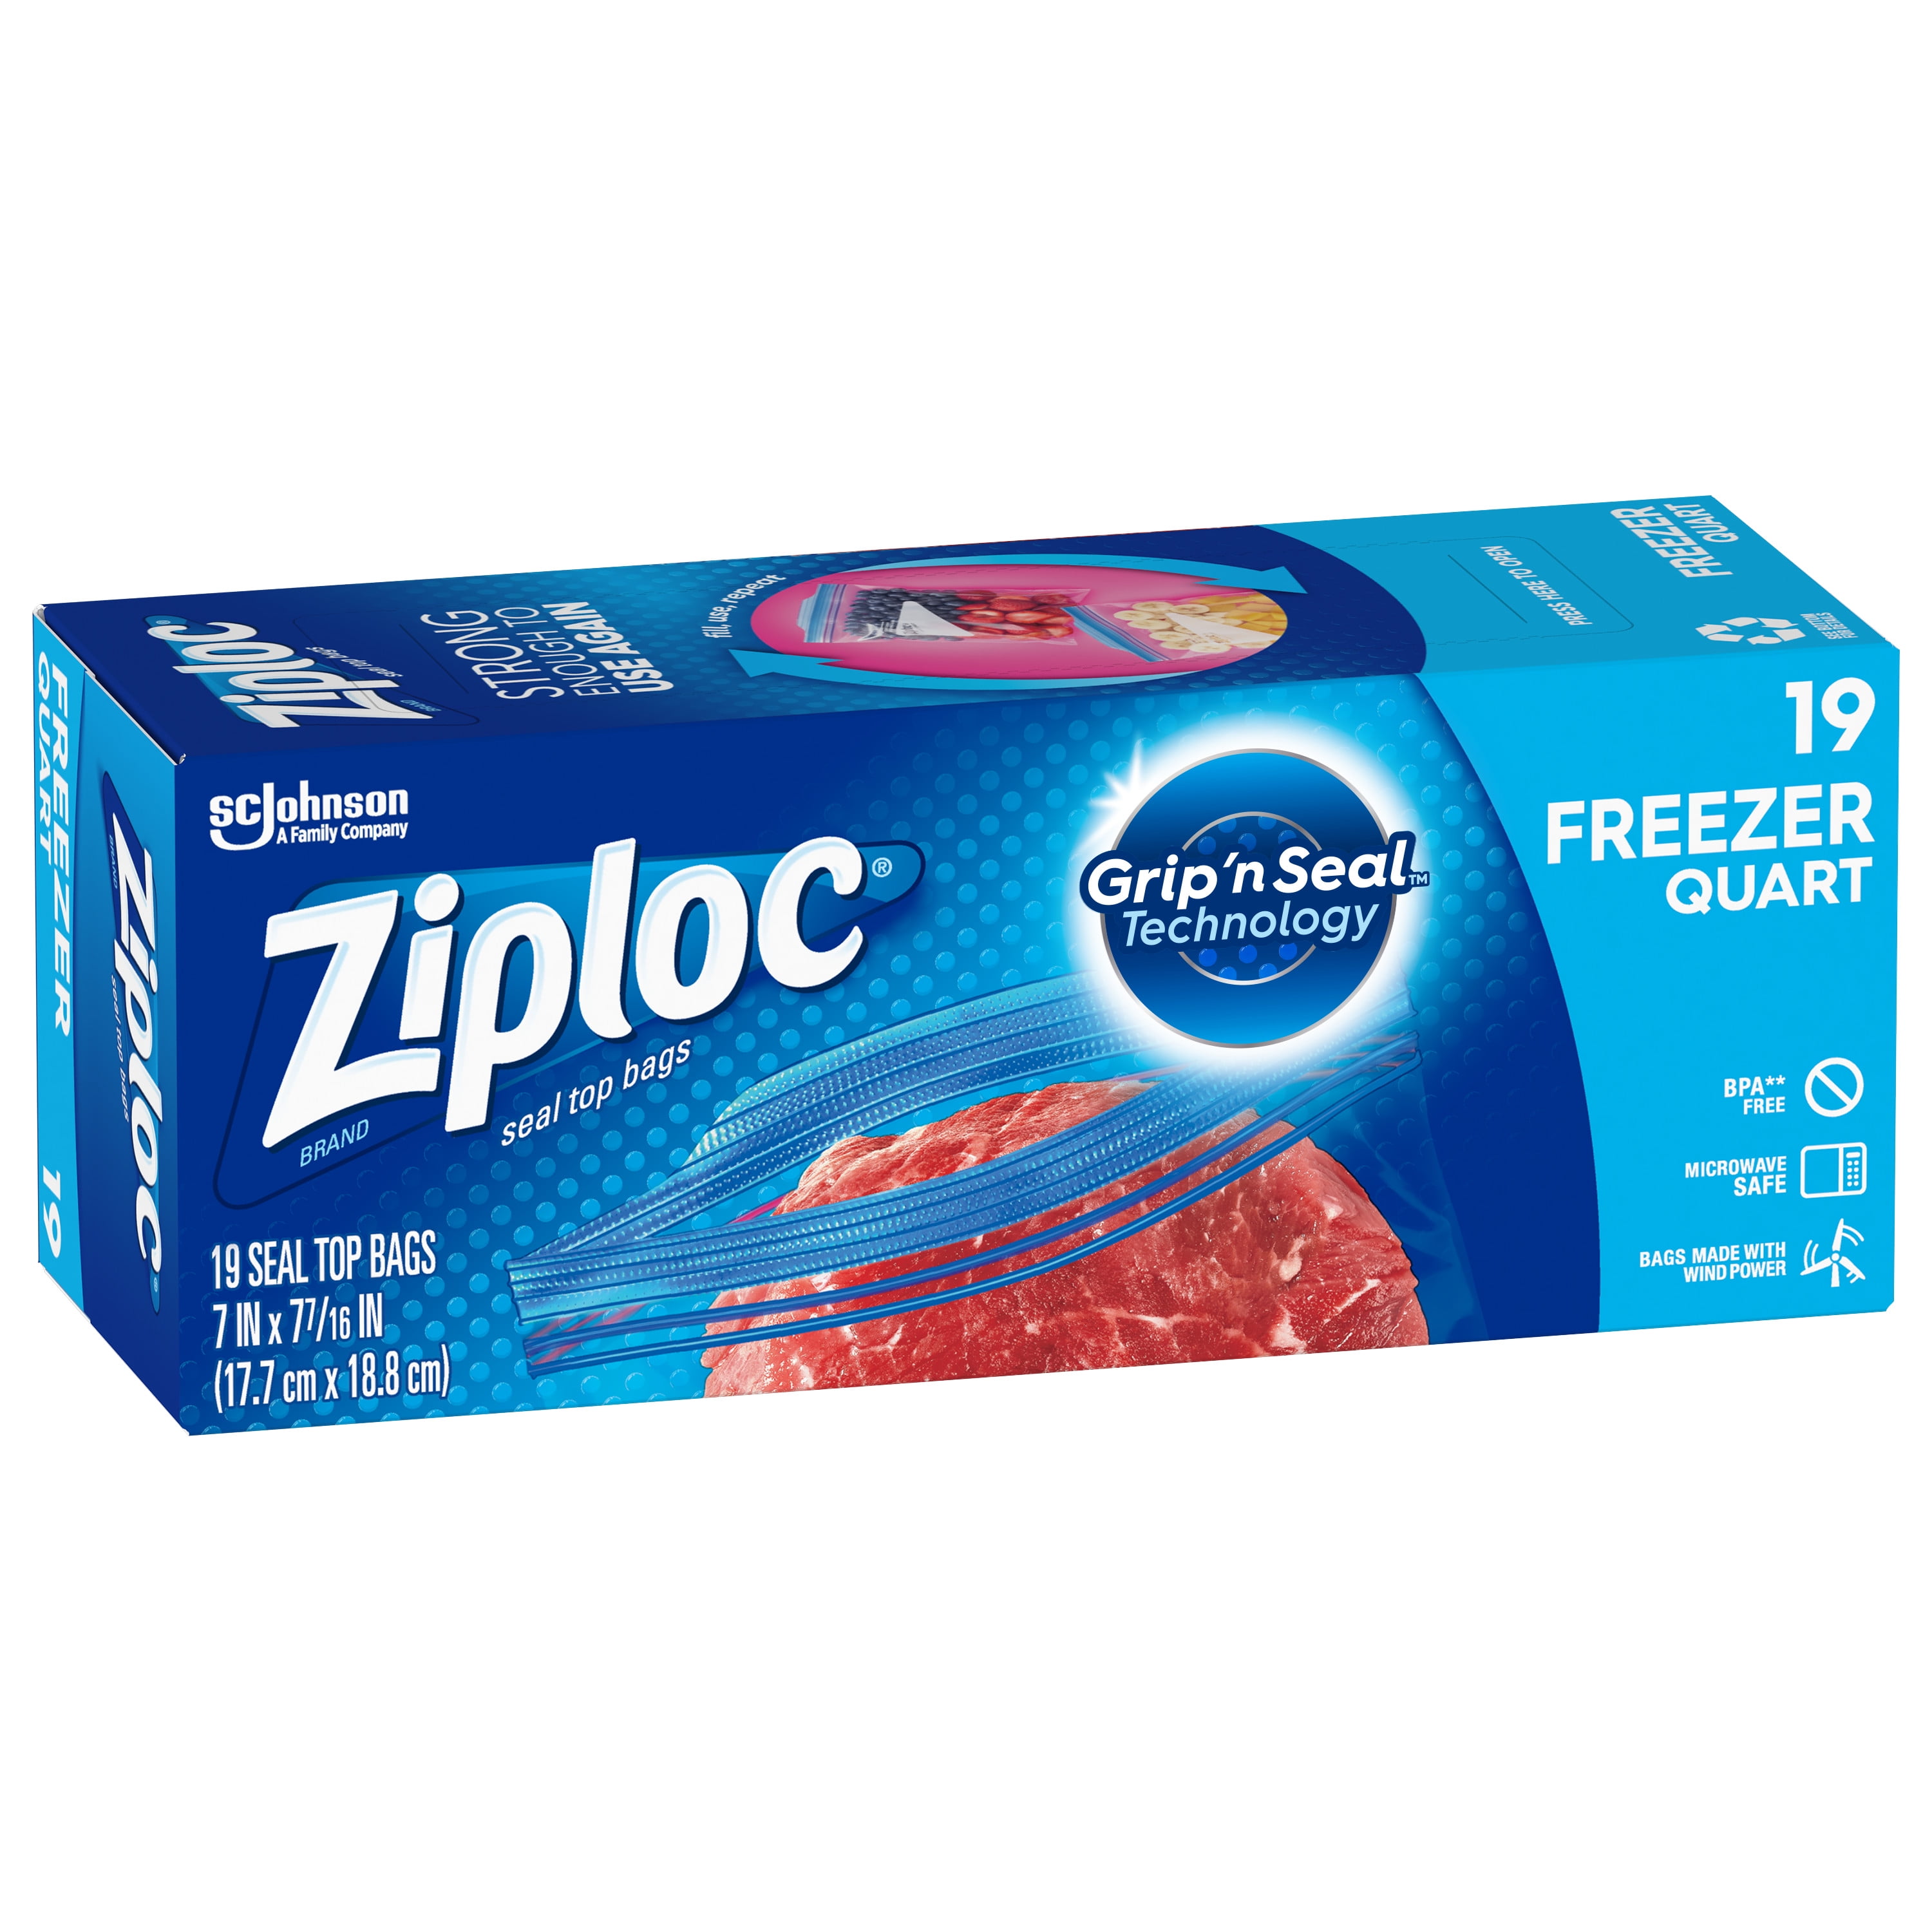 Ziploc Brand Quart Freezer Bags with Grip 'n Seal Technology, 19 ct -  Harris Teeter